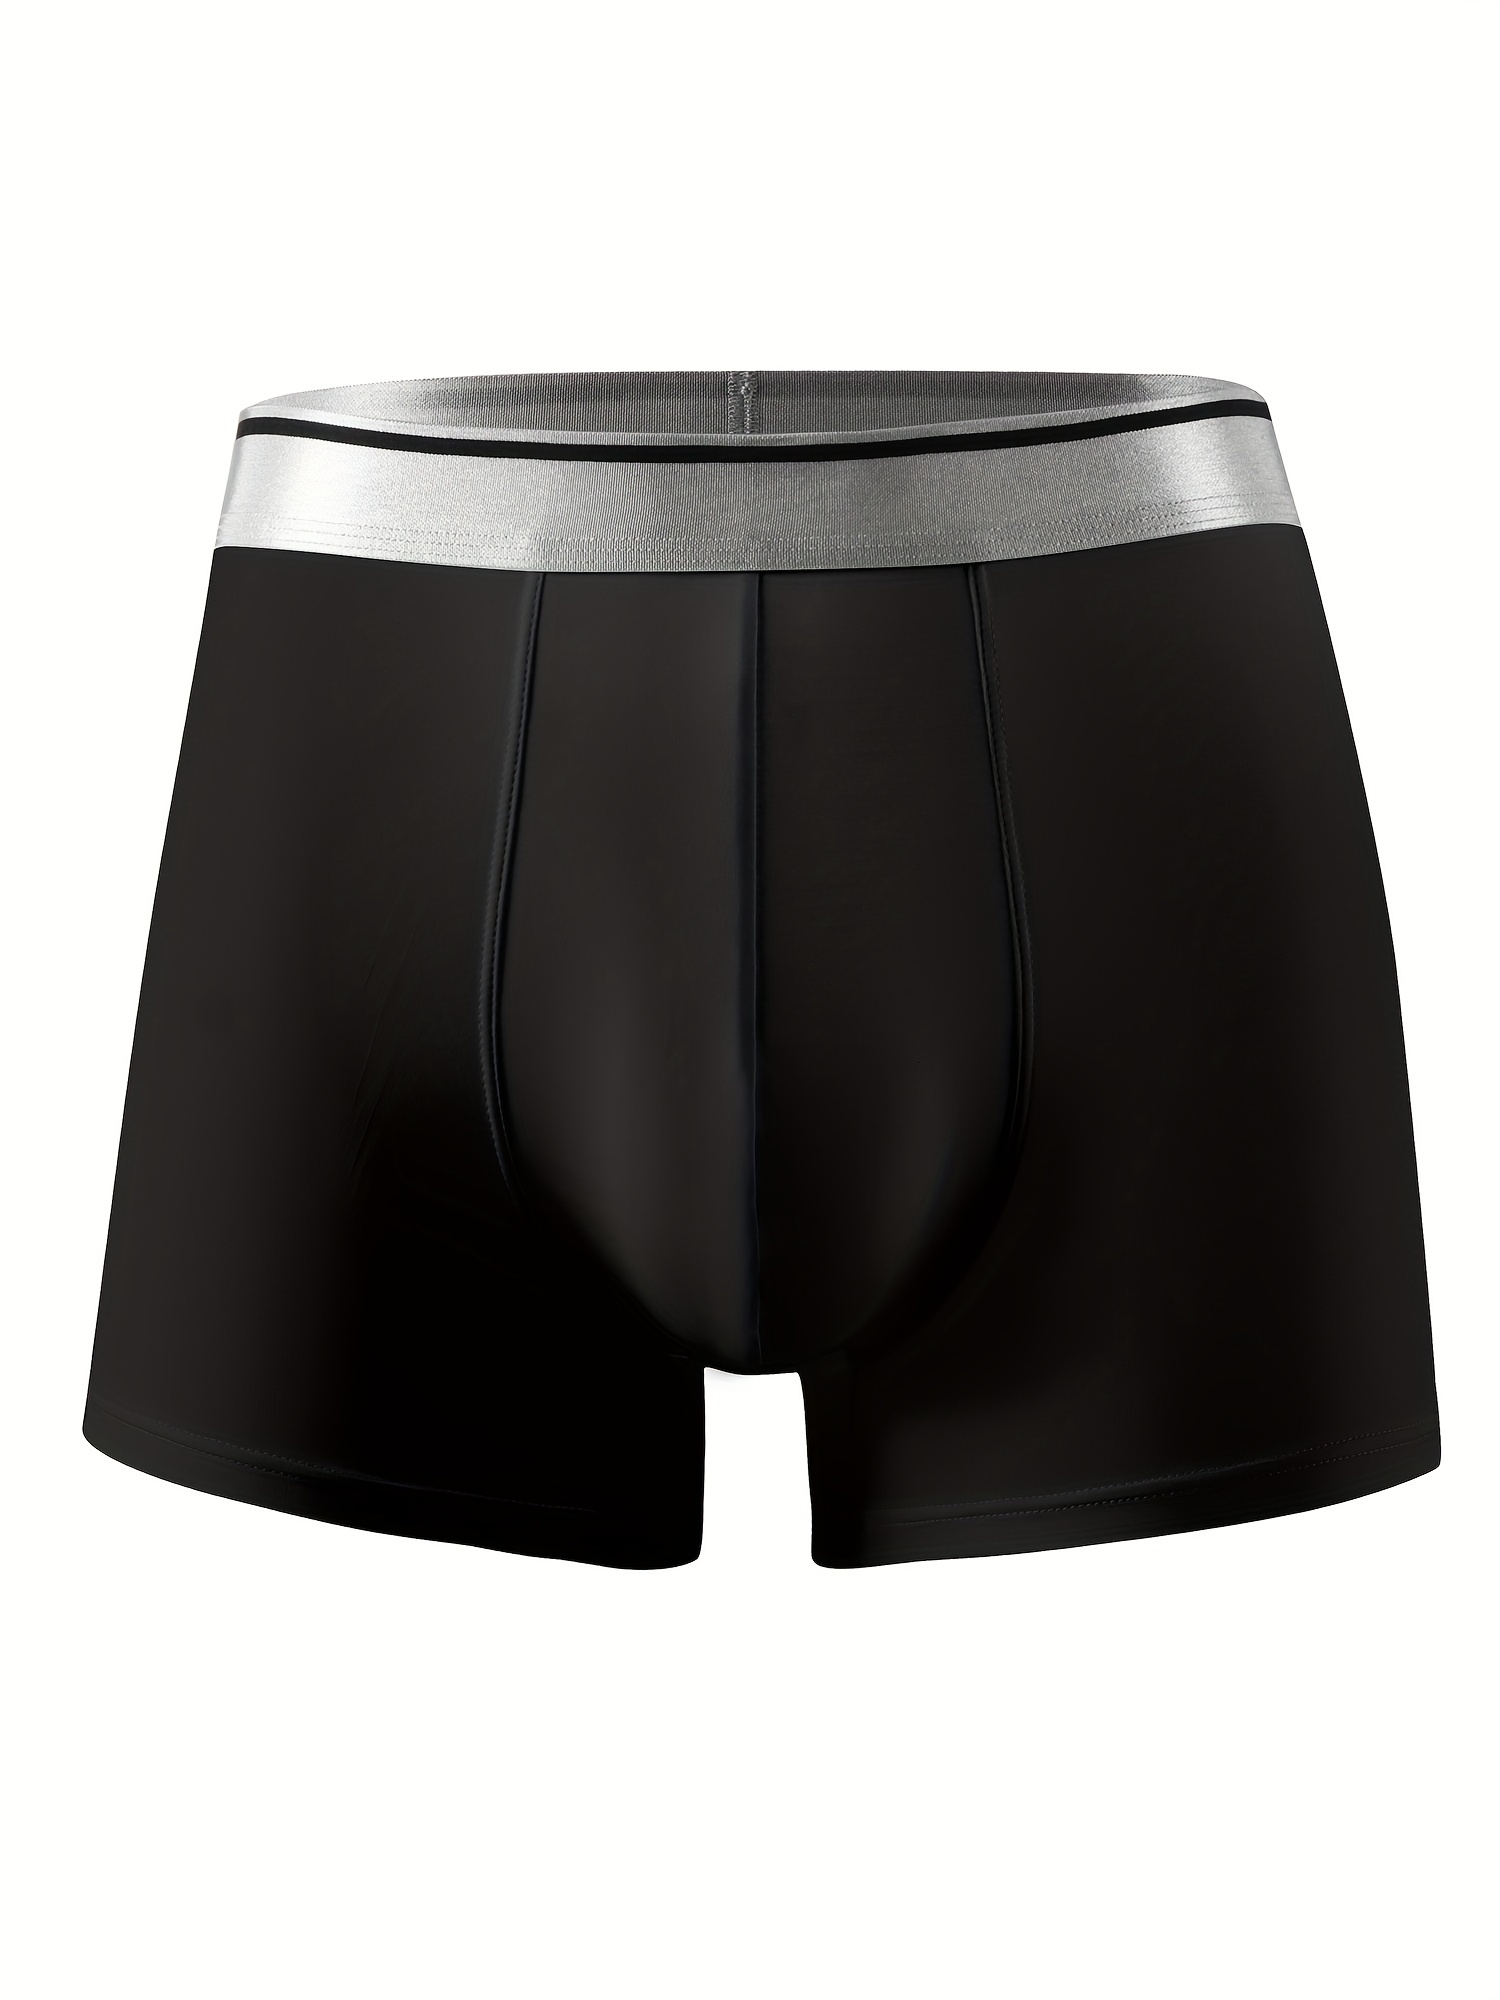 Plus Size Men's Ultra Thin Ice Silk Nylon Boxer Briefs Underwear Black